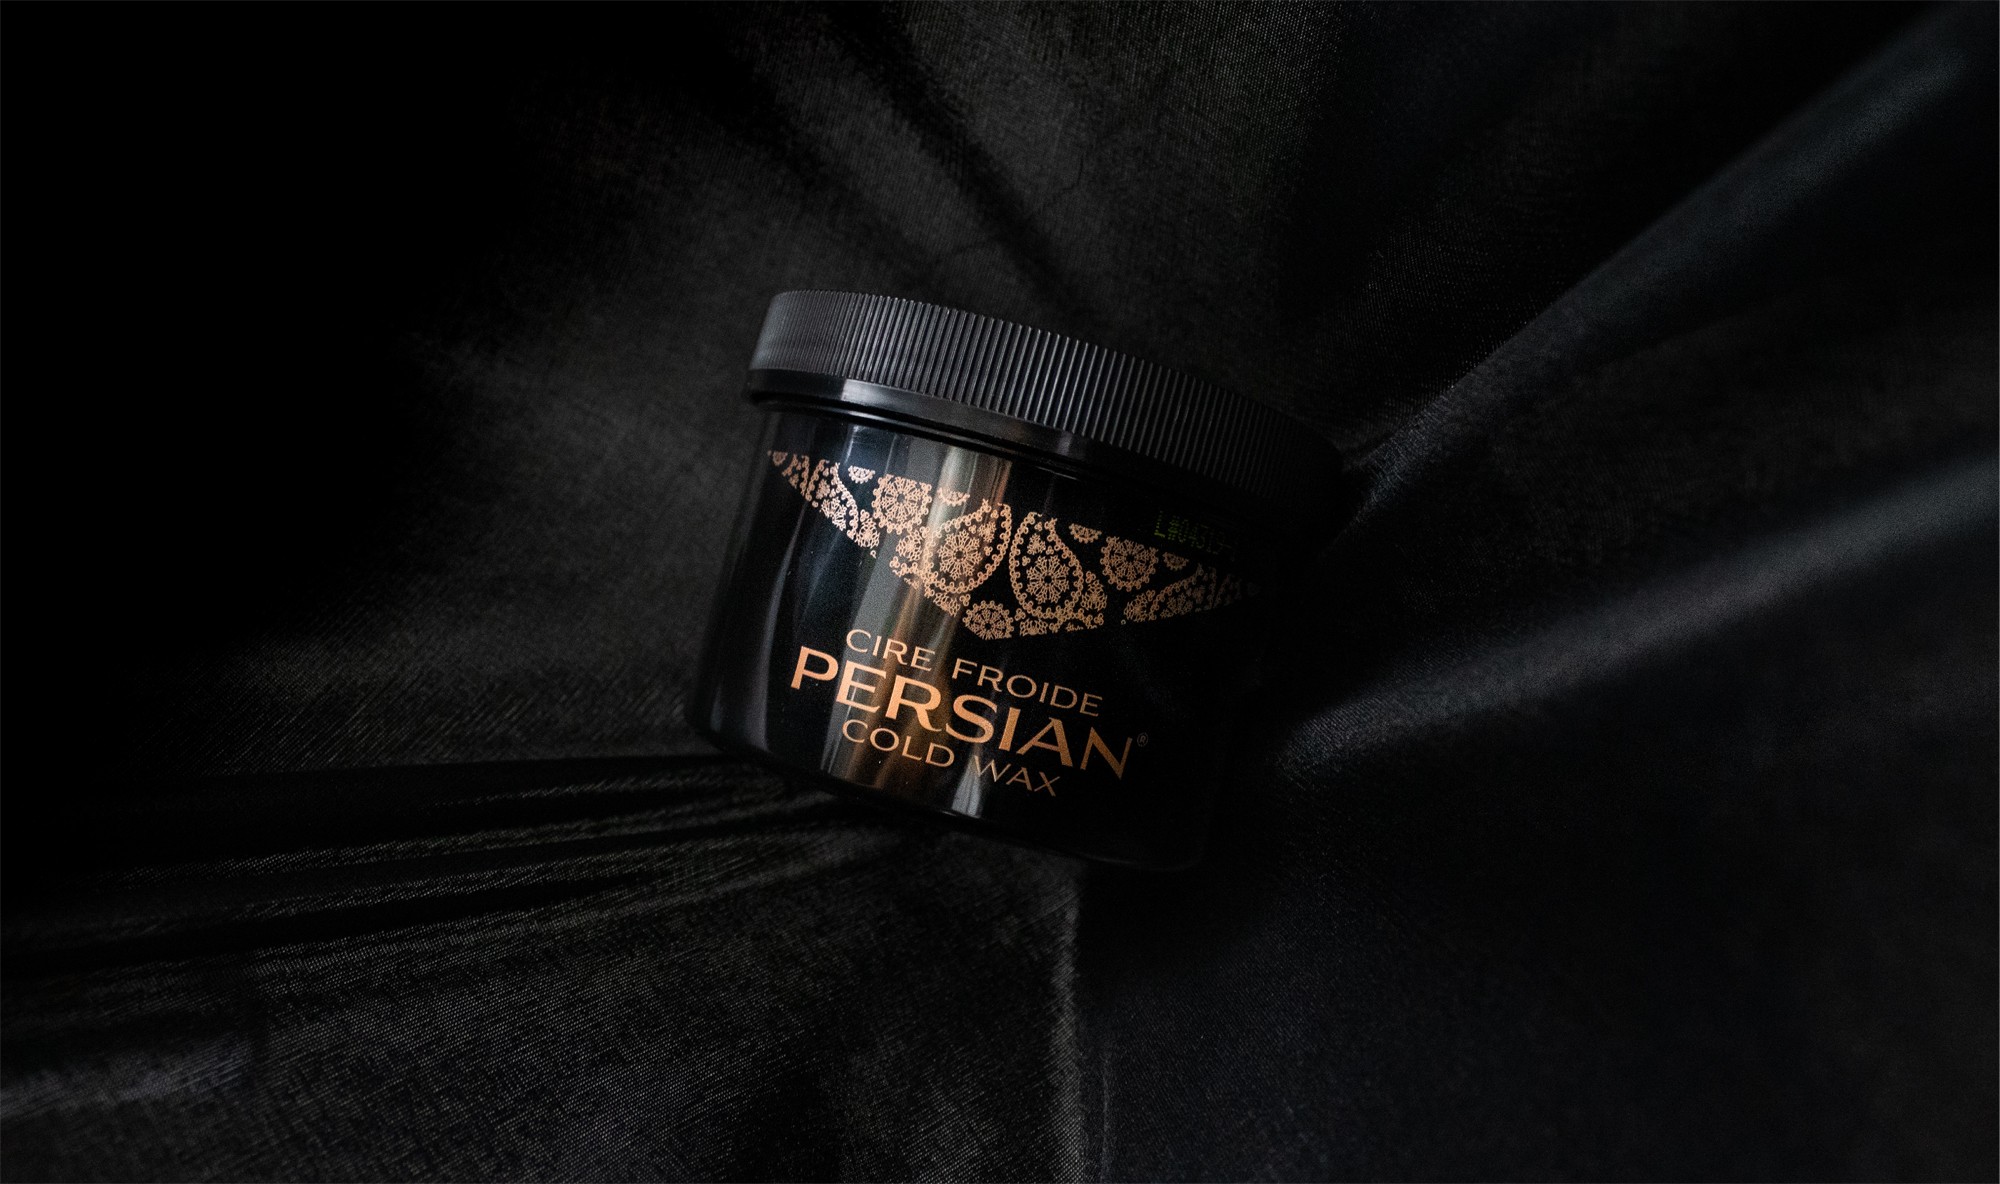 Persian Cold Wax - Westside Beauty